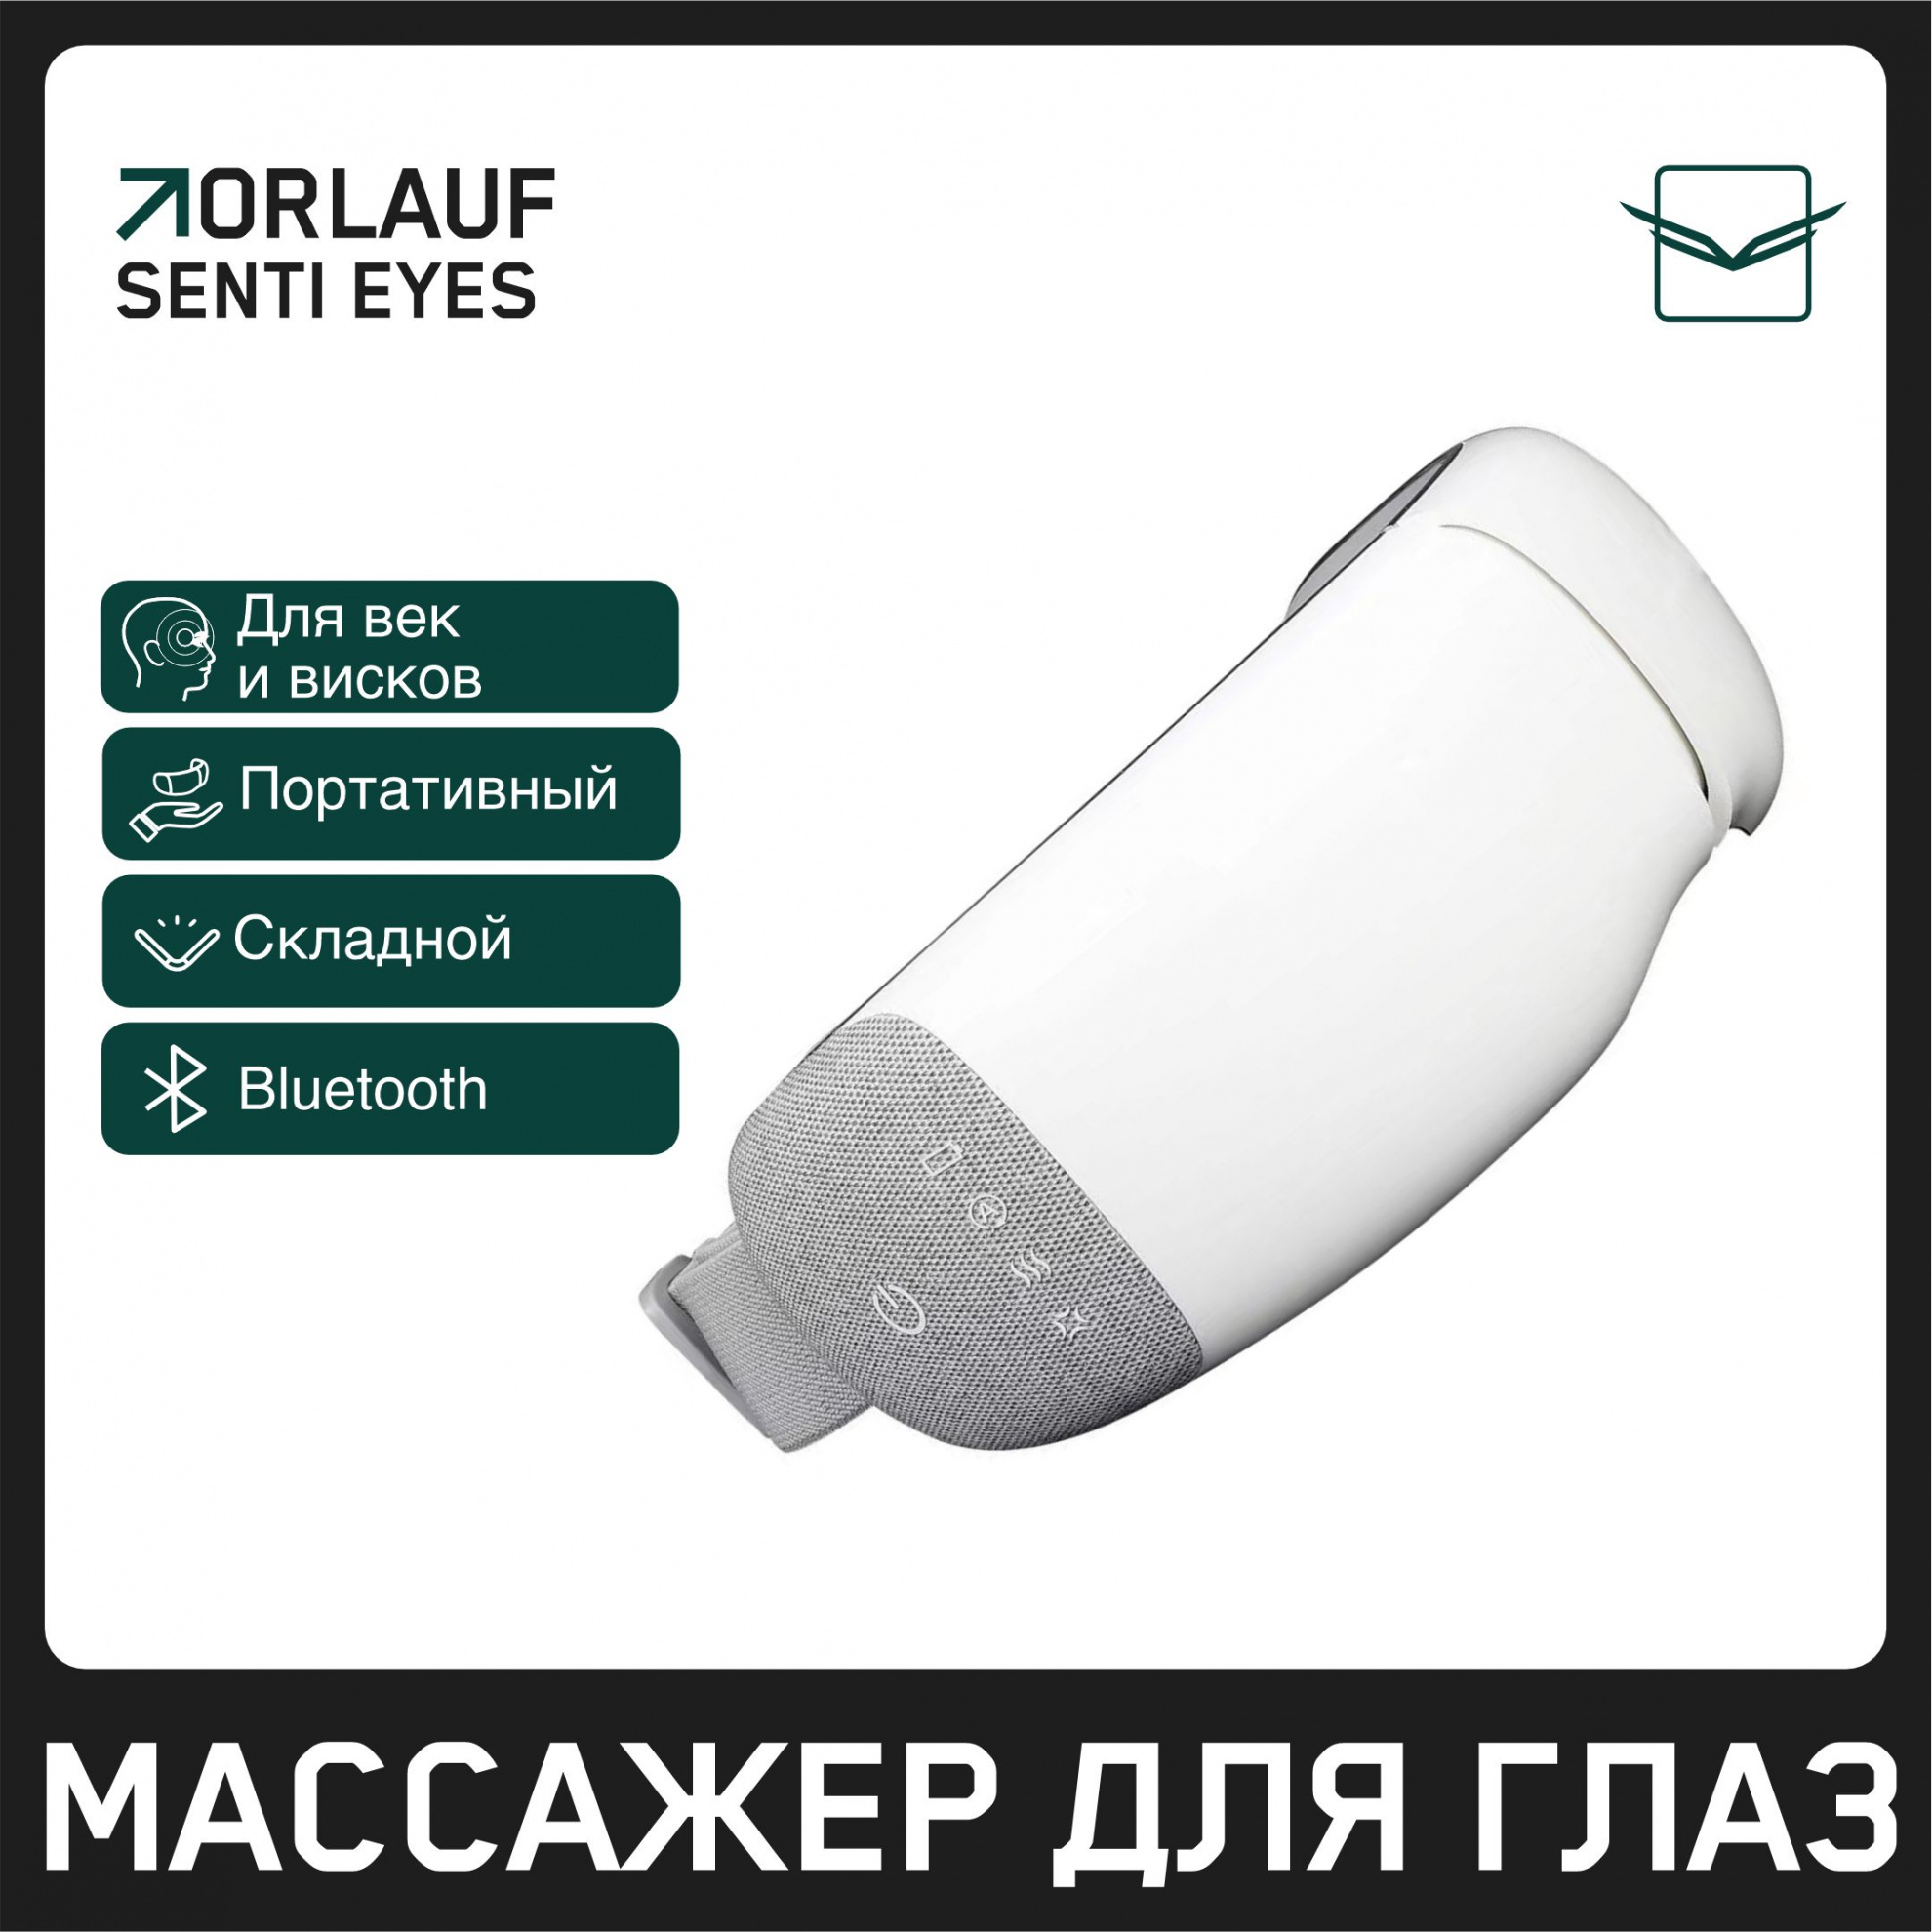 Senti Eyes в Екатеринбурге по цене 9400 ₽ в категории каталог Orlauf